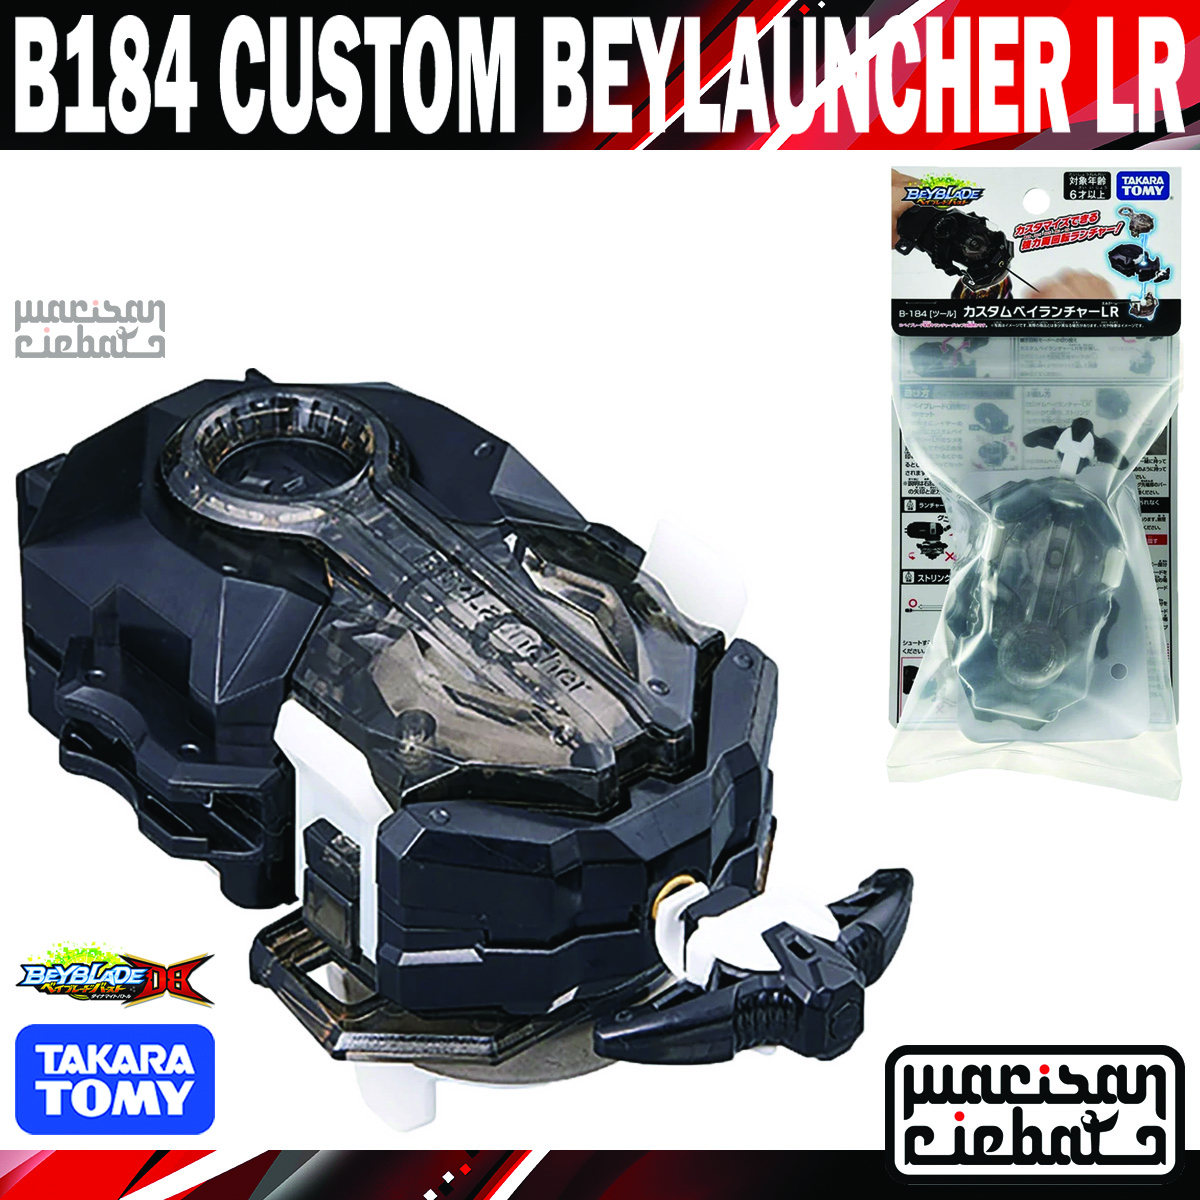 Custom BeyLauncher LR